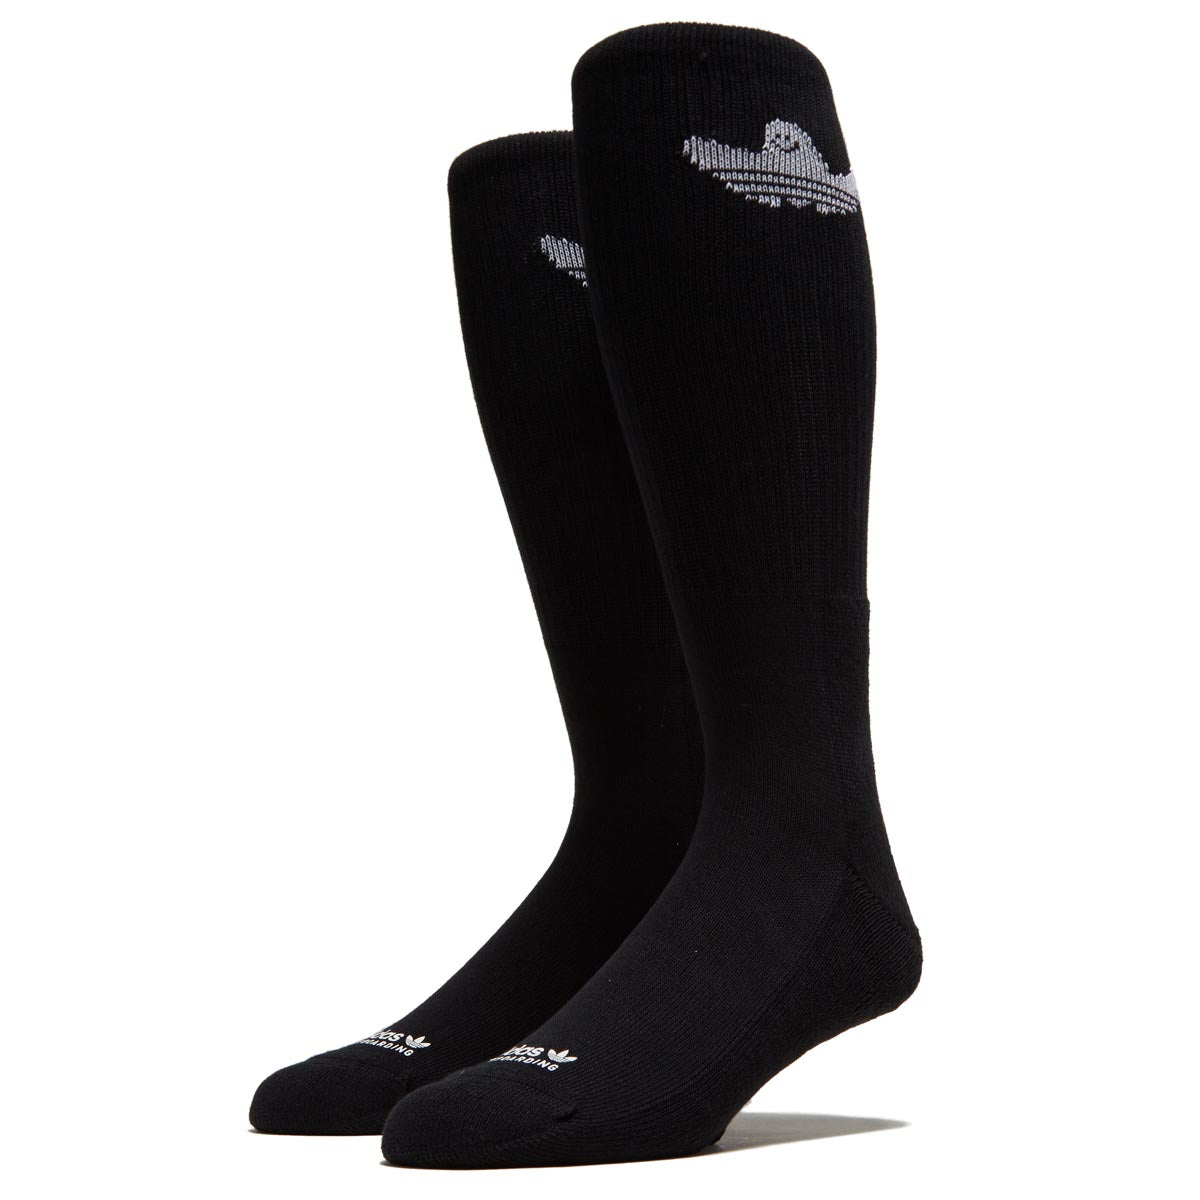 Adidas Shmoo Socks - Black image 1